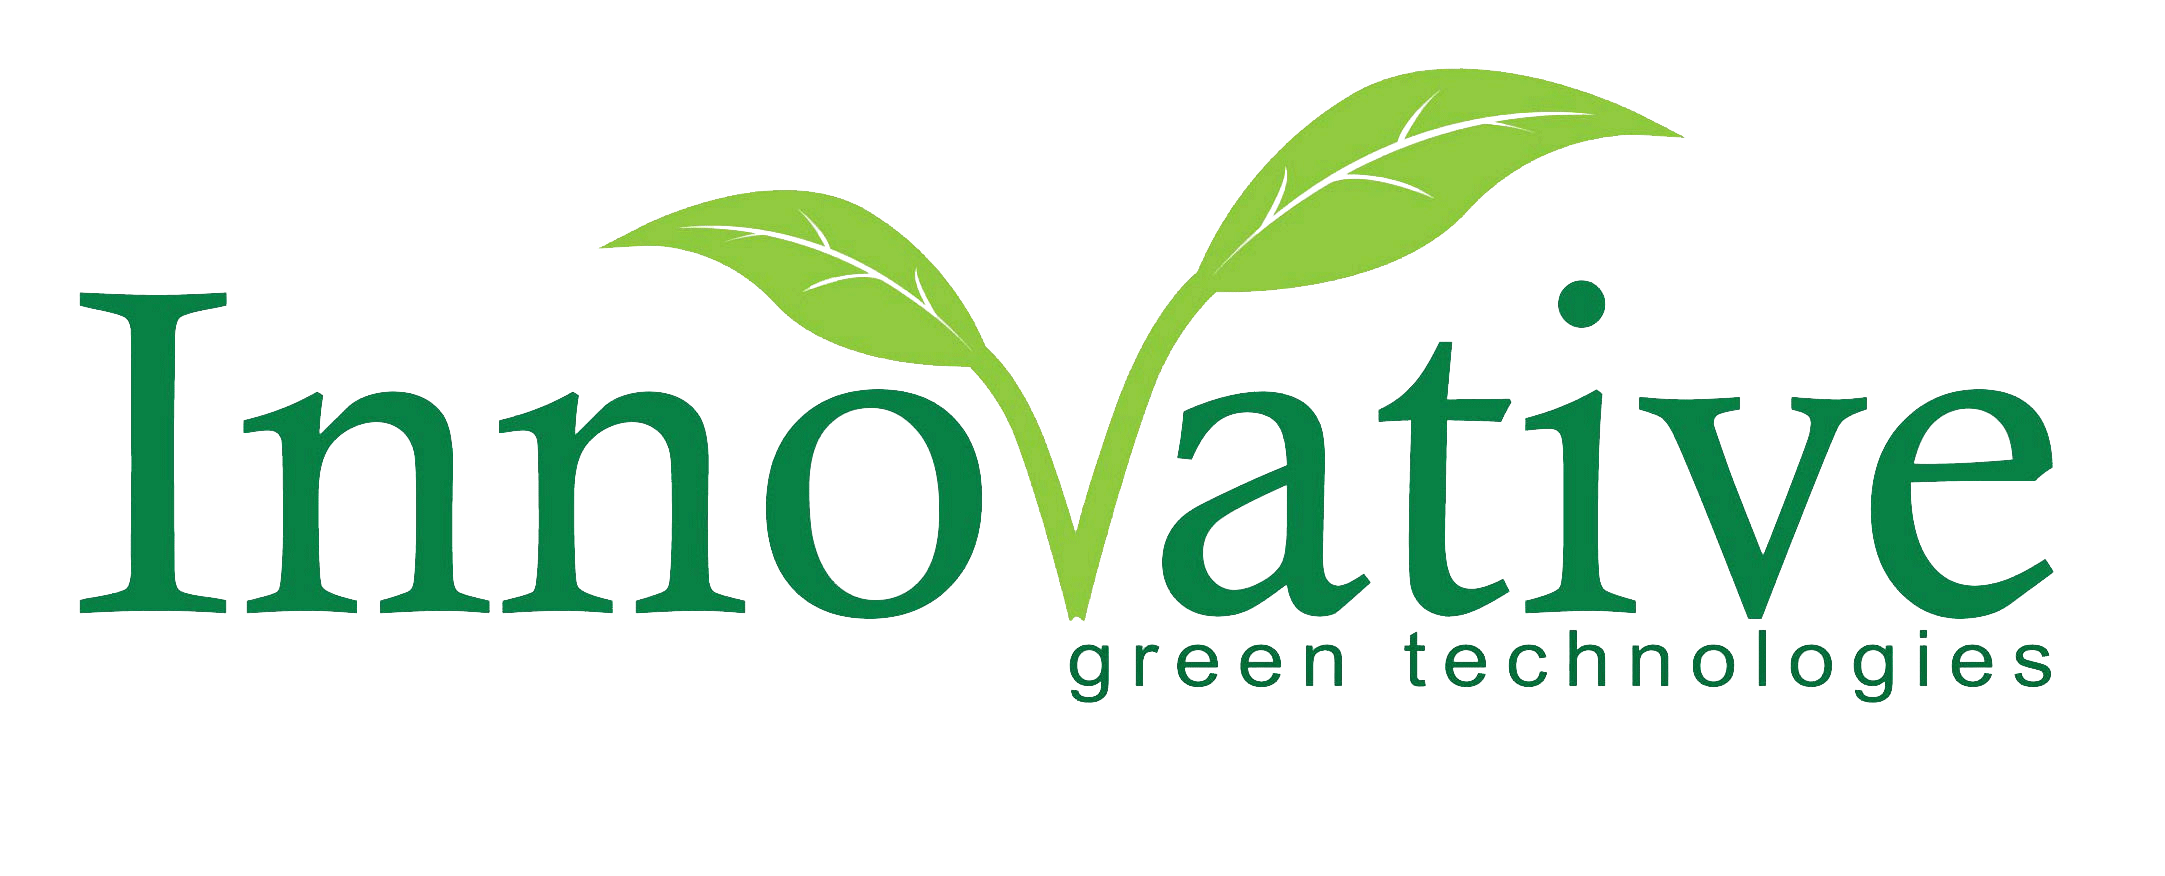 Vita green. Логотип GREENTECH. Innovative Technologies лого. "Green Technologies" ООО. Vita Green logo.